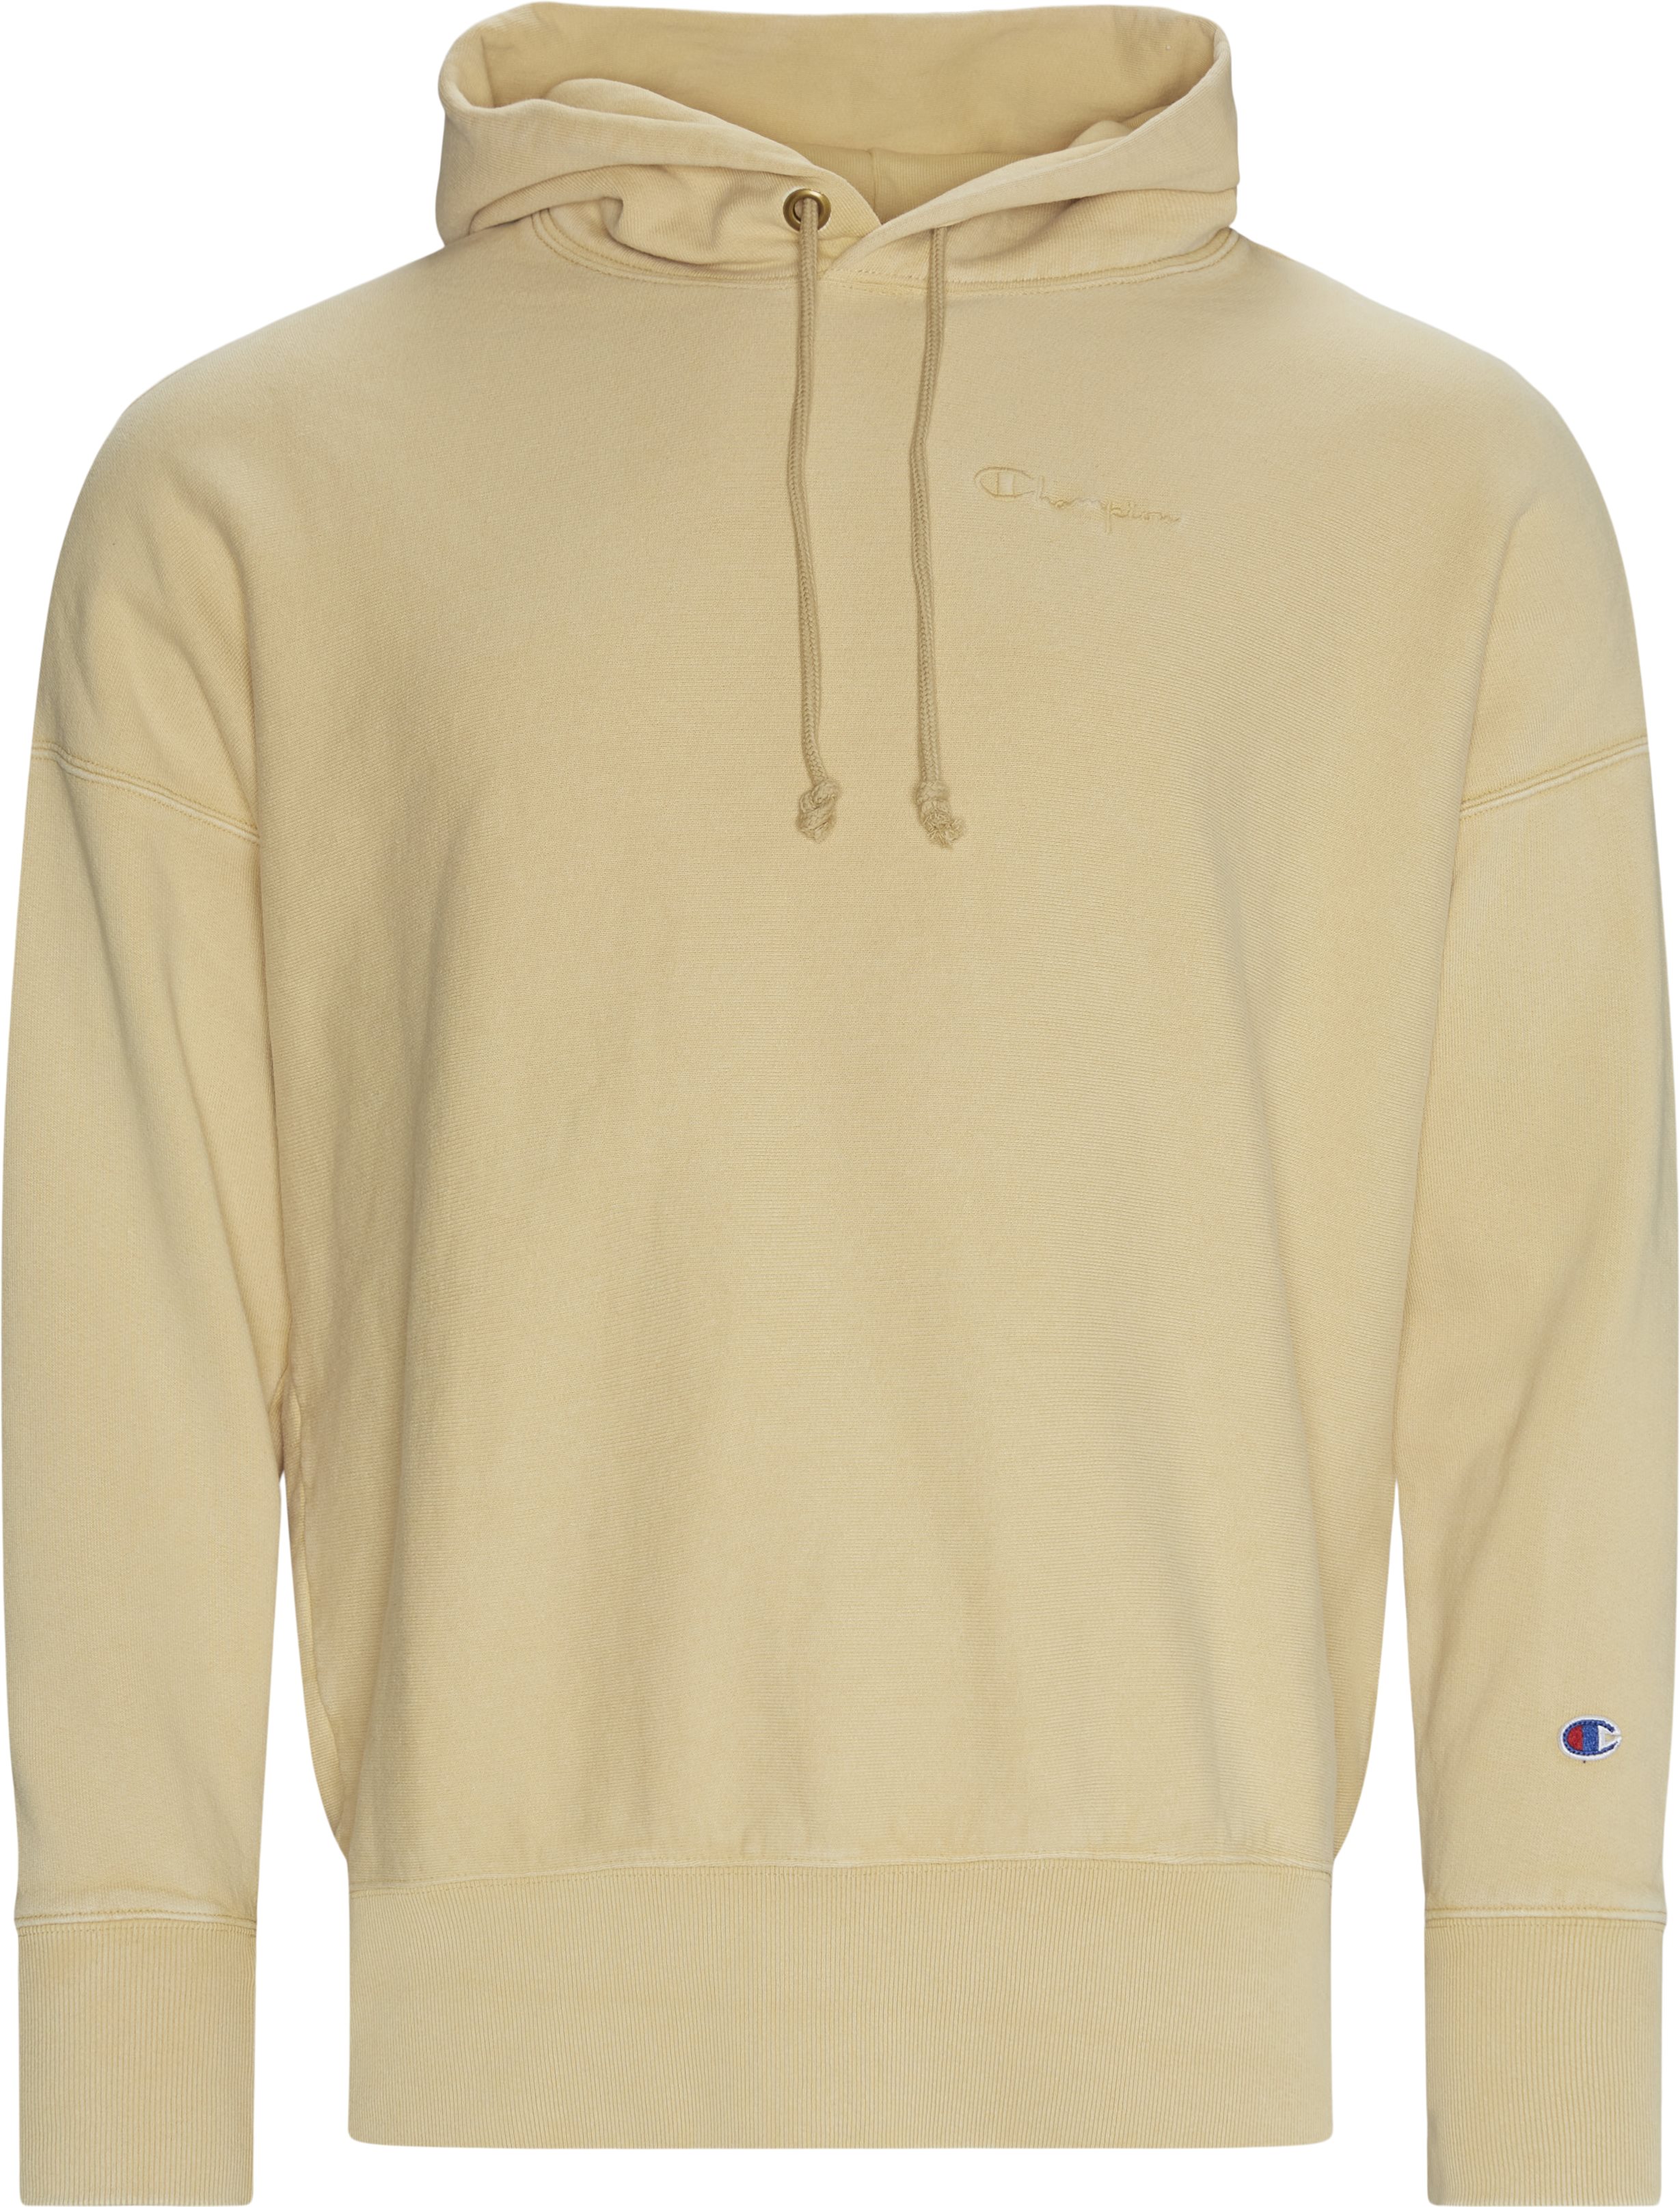 GD Hood Sweatshirt - Sweatshirts - Regular fit - Sand